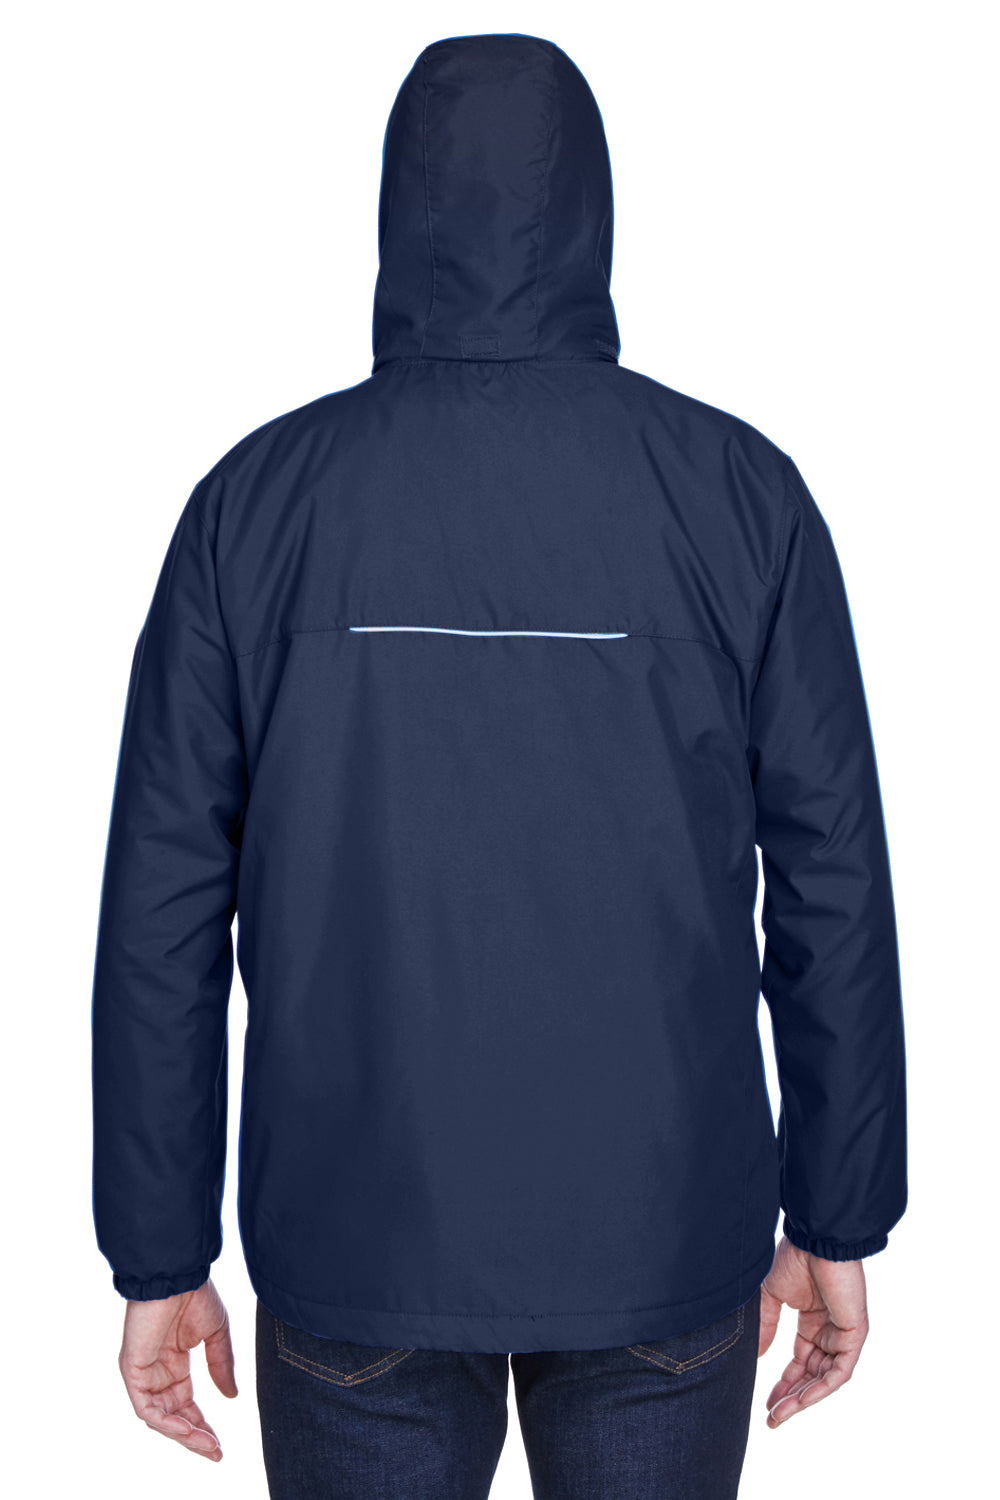 Core 365 88189 Mens Brisk Full Zip Hooded Jacket Navy Blue Back